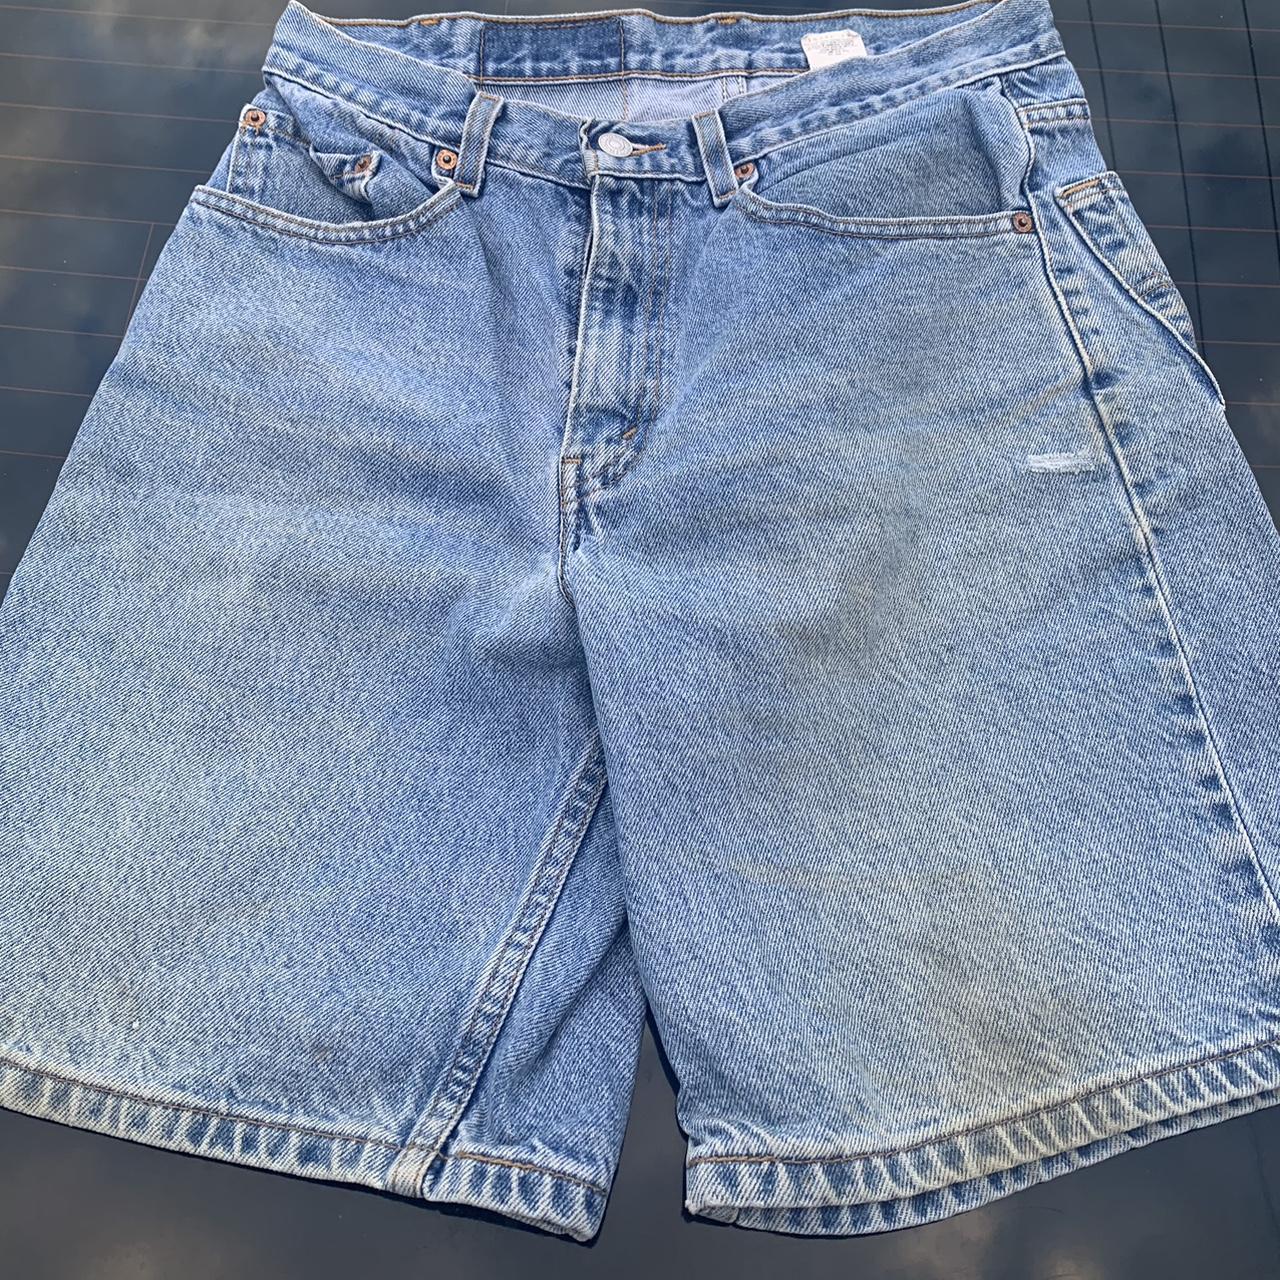 Jean shorts Levi 550 size 31 - Depop